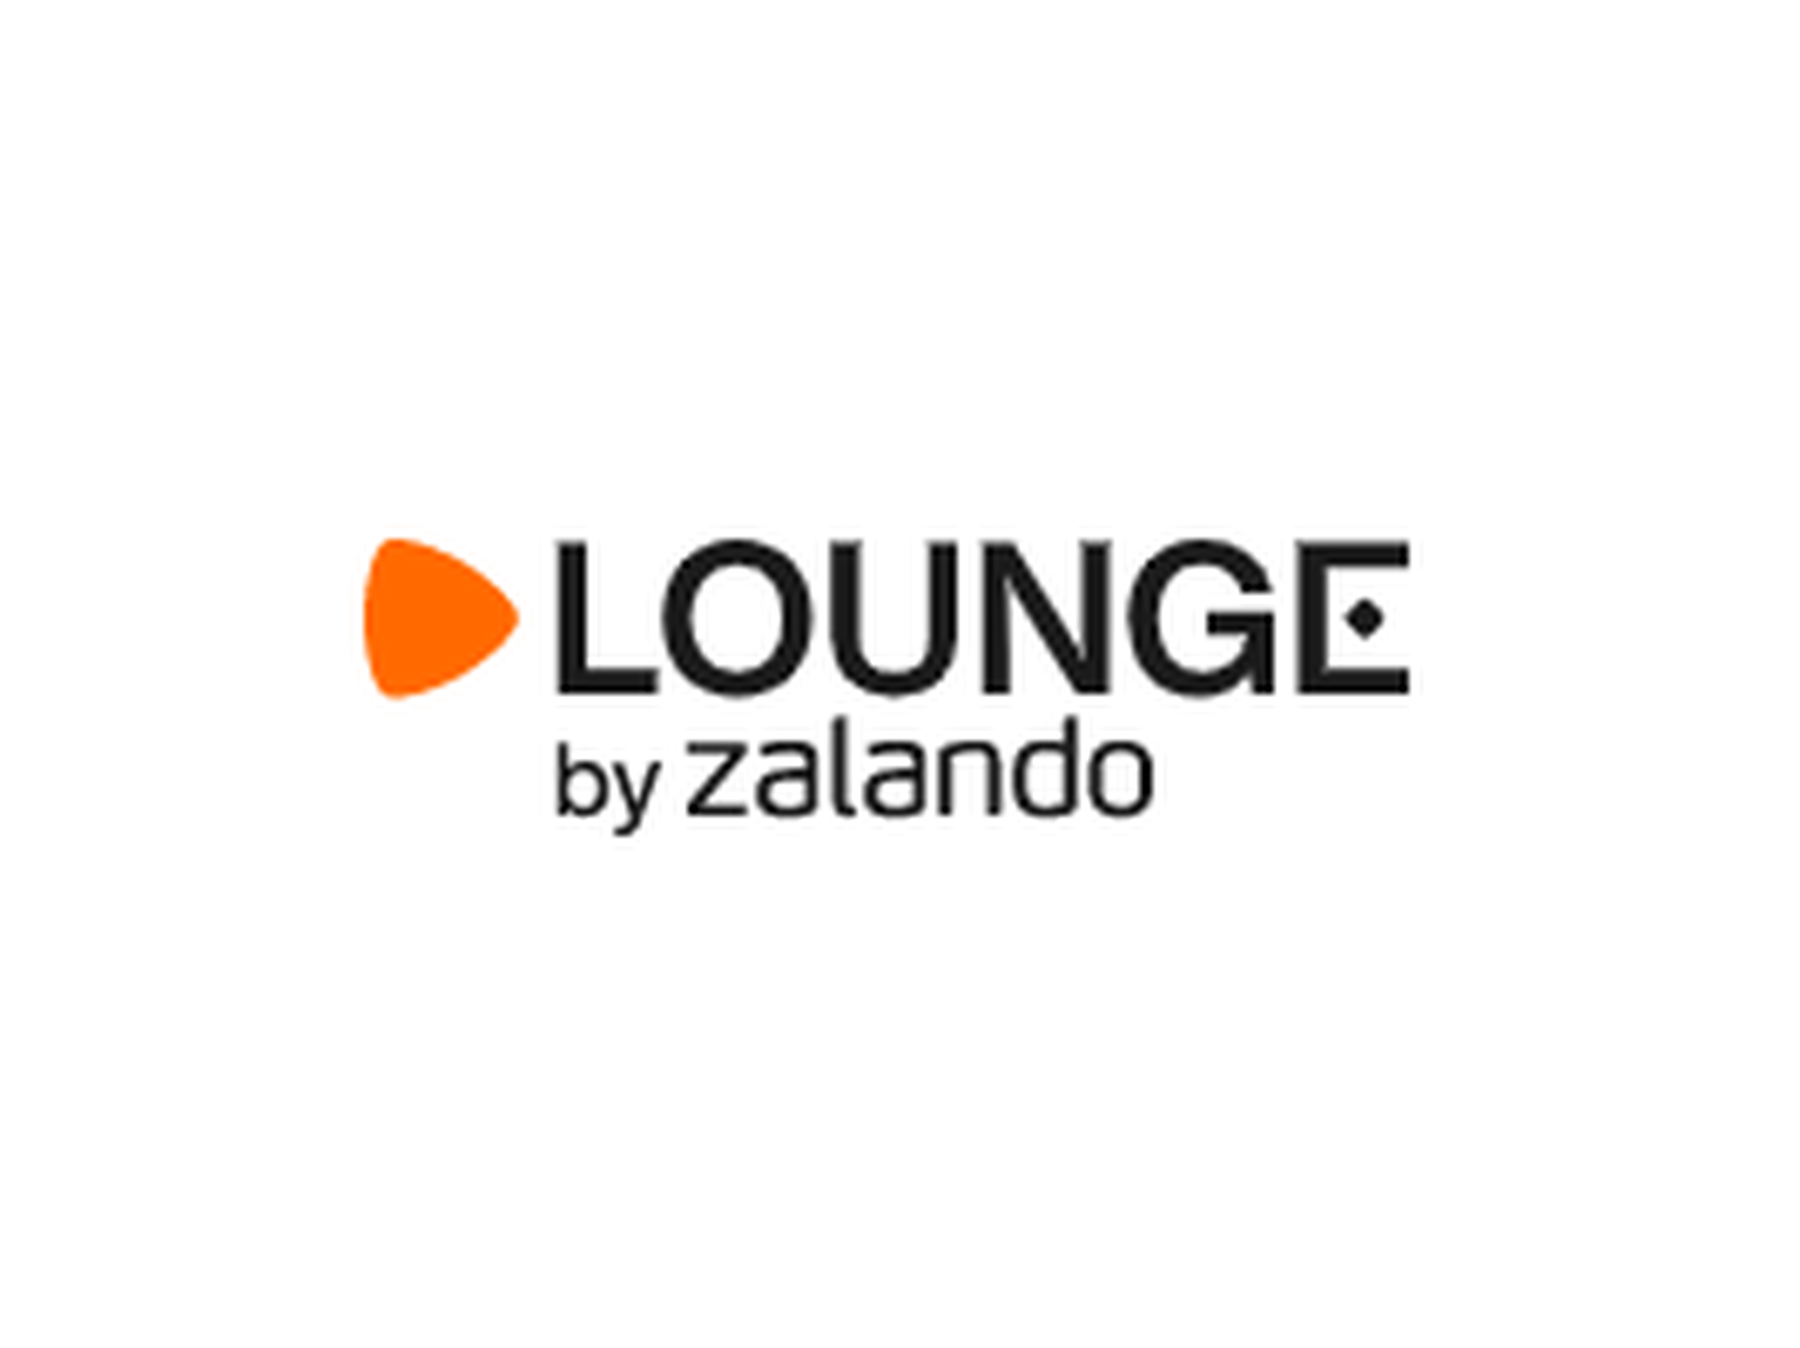 Zalando Lounge kortingscode